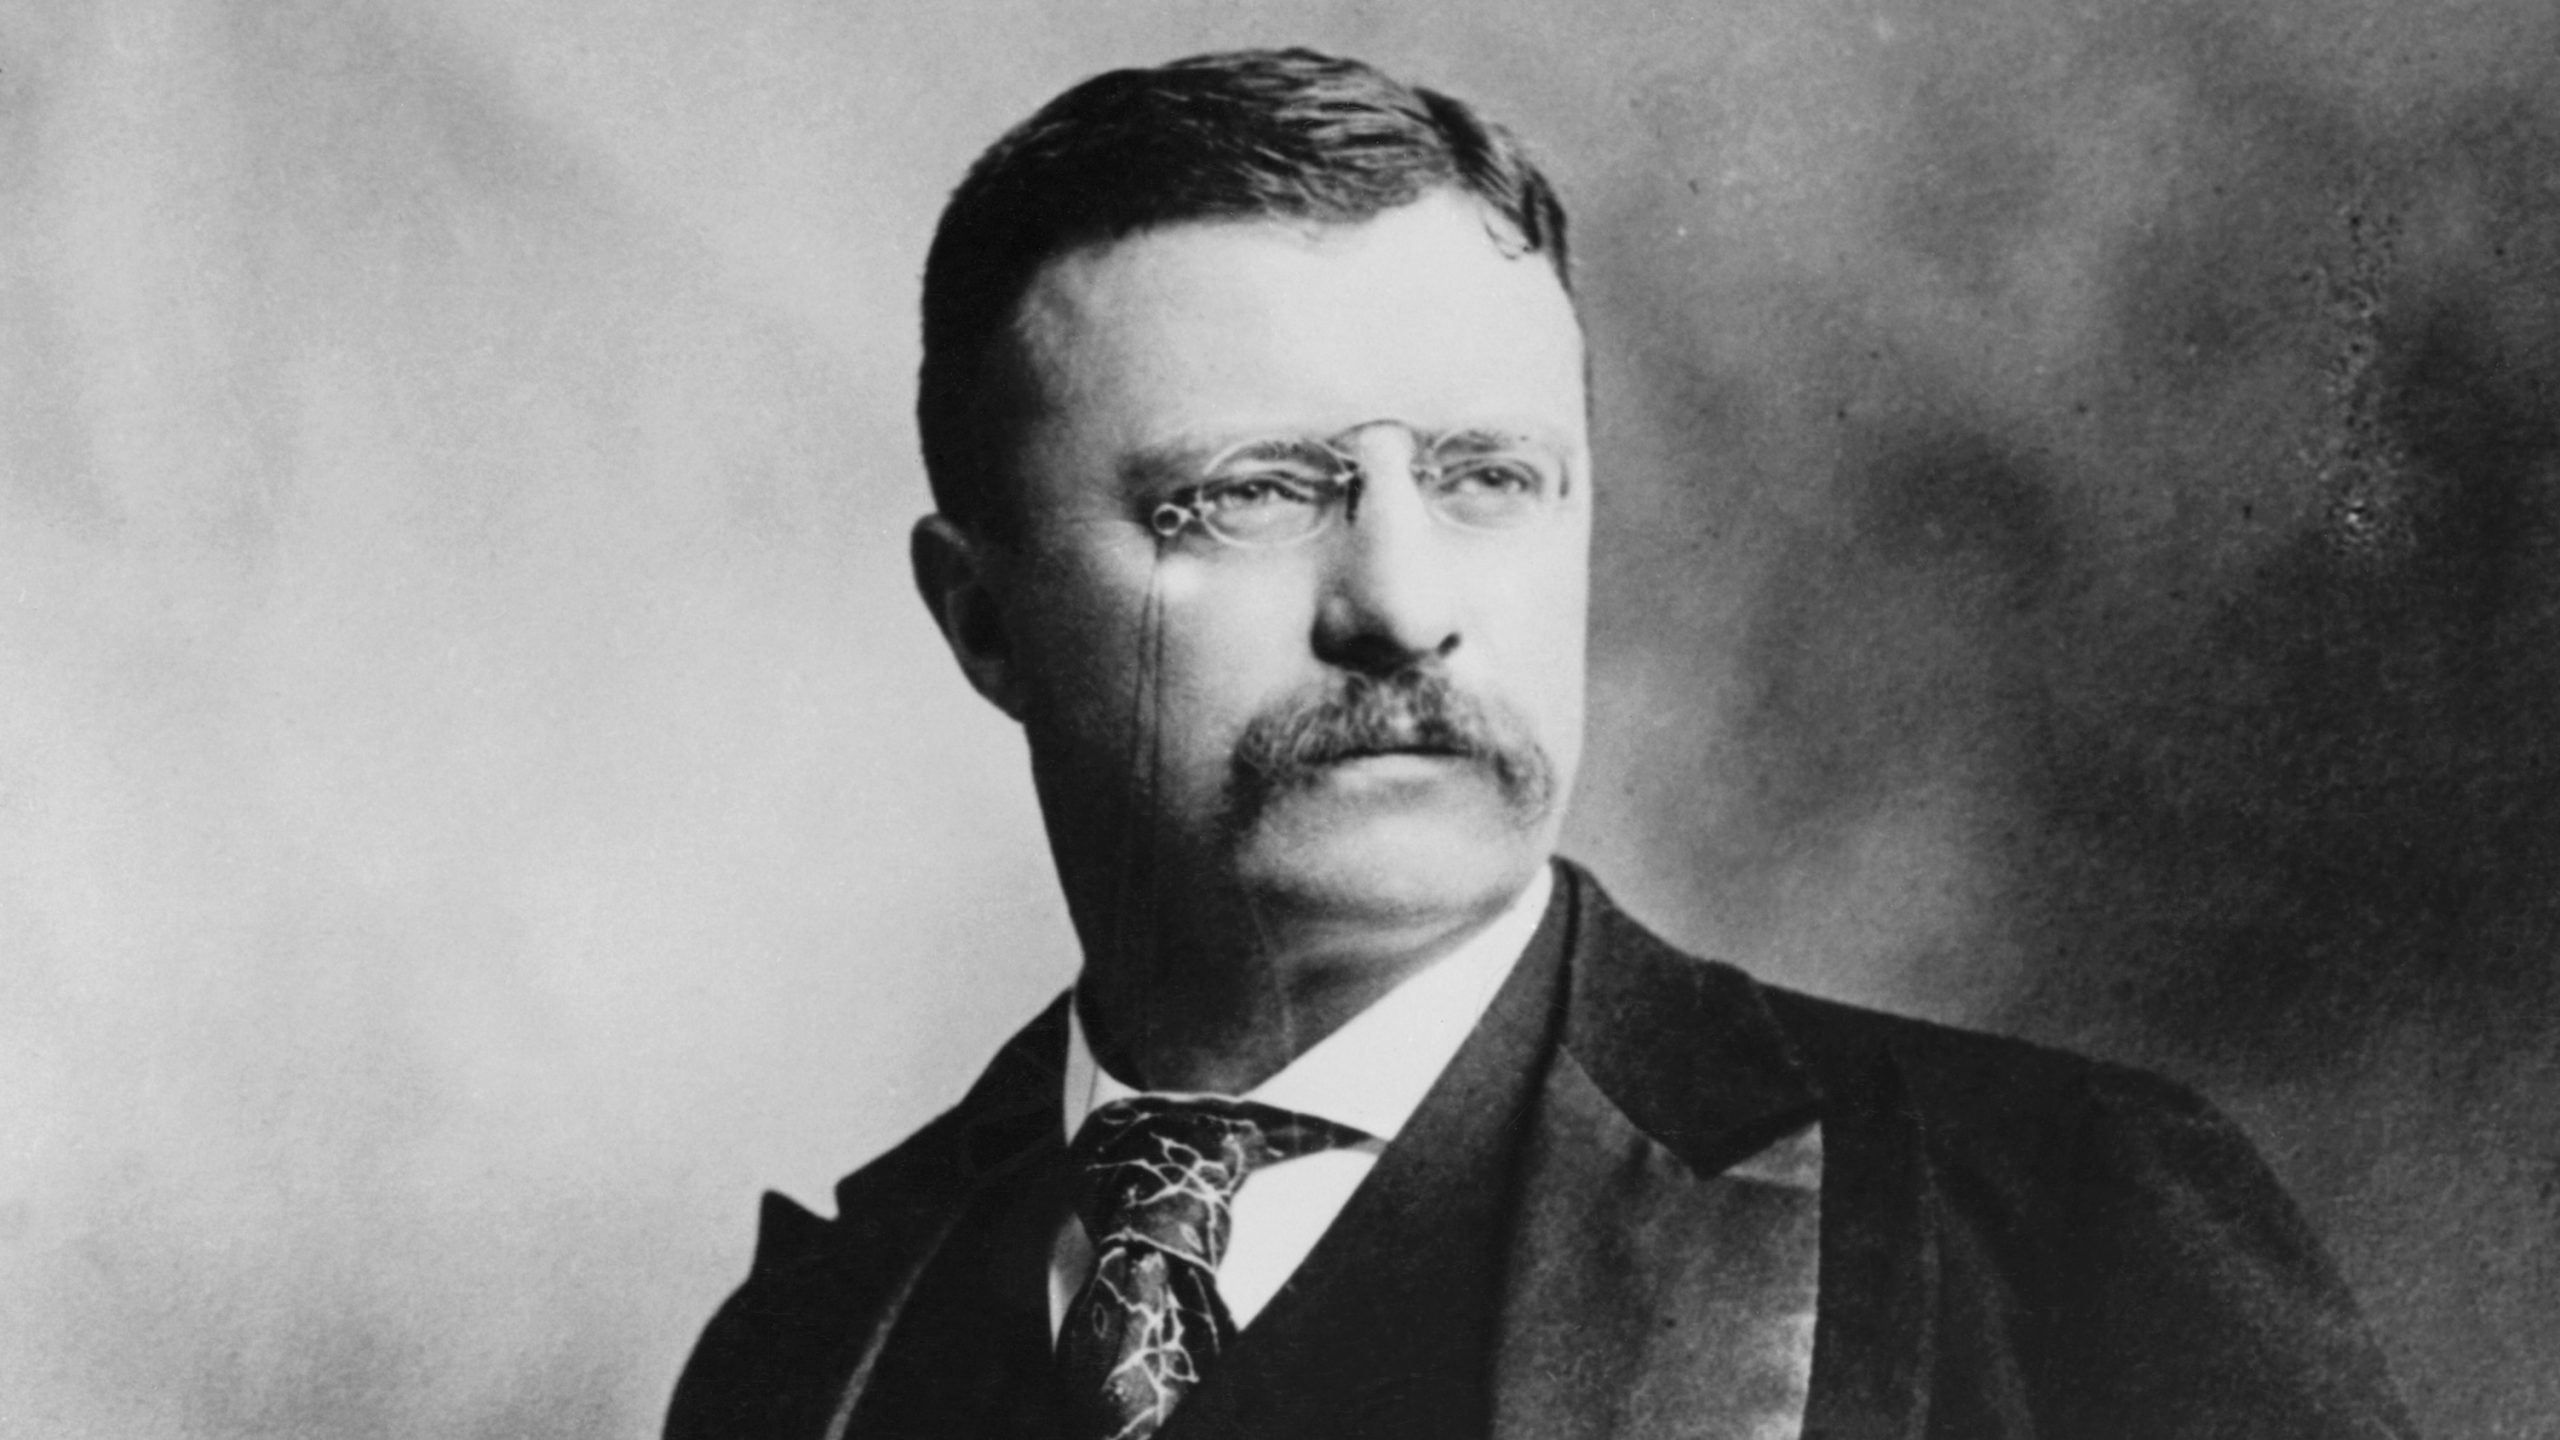 Theodore Roosevelt portrait photo